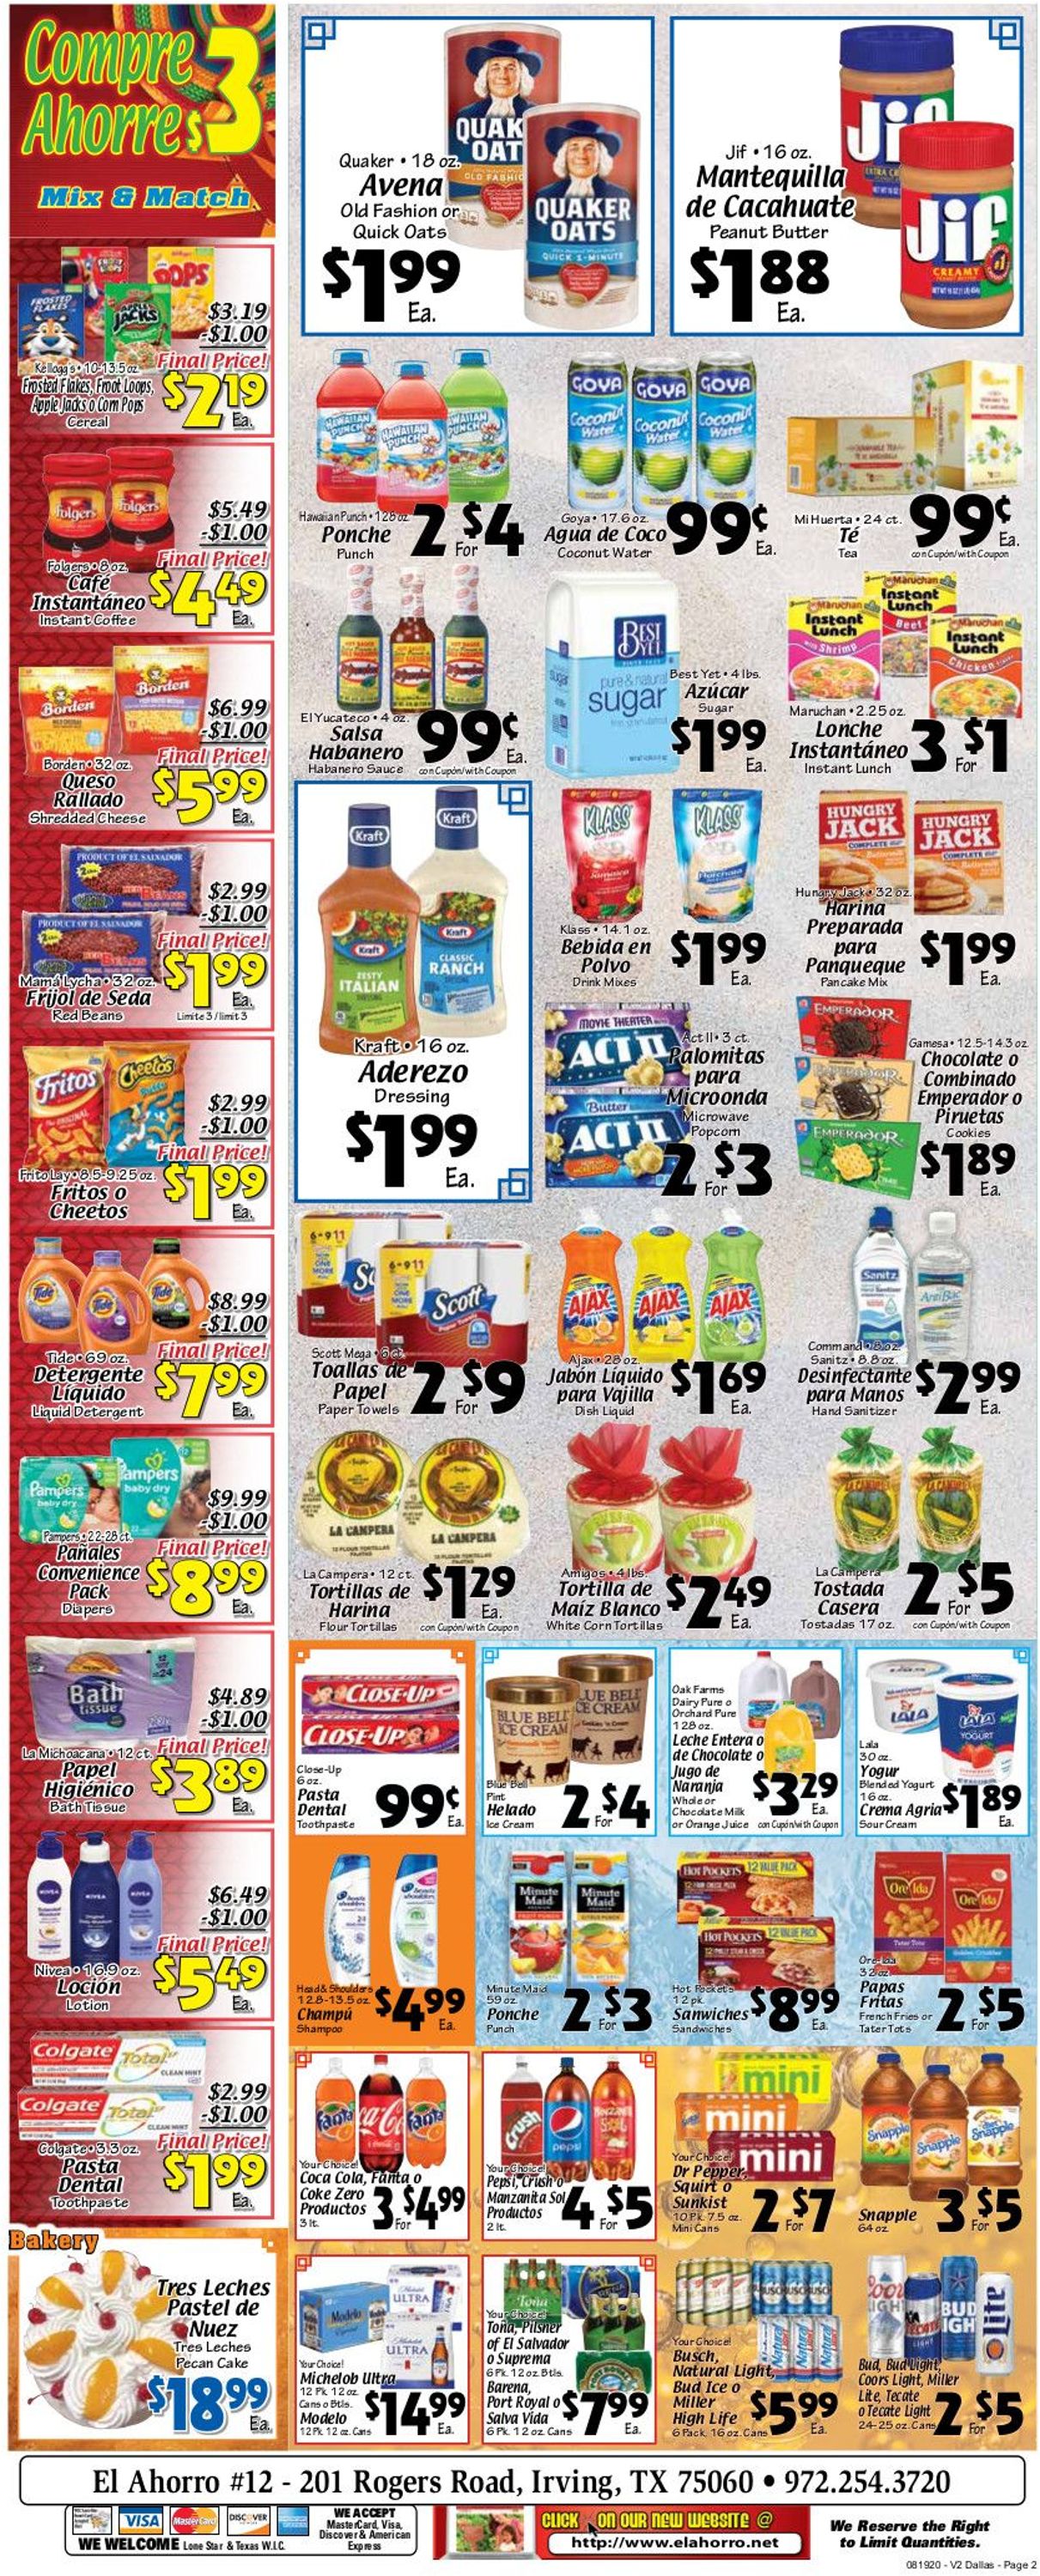 El Ahorro Supermarket Current weekly ad 08/19 - 08/25/2020 ...